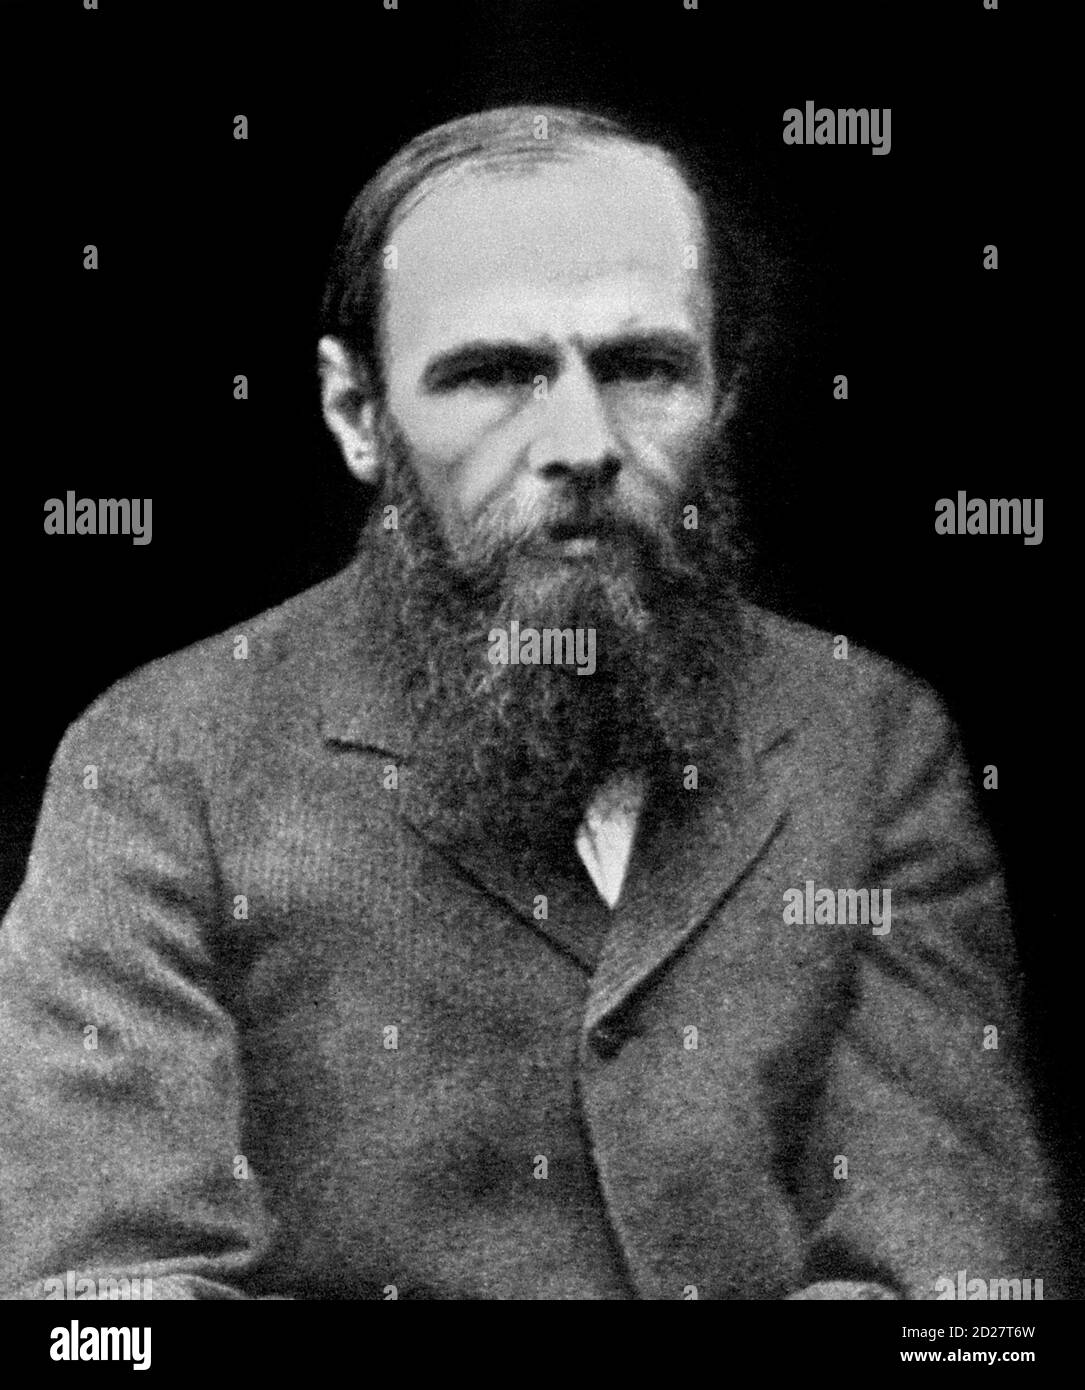 Dostoevsky. Portrait of the Russian writer, Fyodor Mikhailovich Dostoevsky (1821-1881) c.1880. Fedor Dostoyevsky. Stock Photo